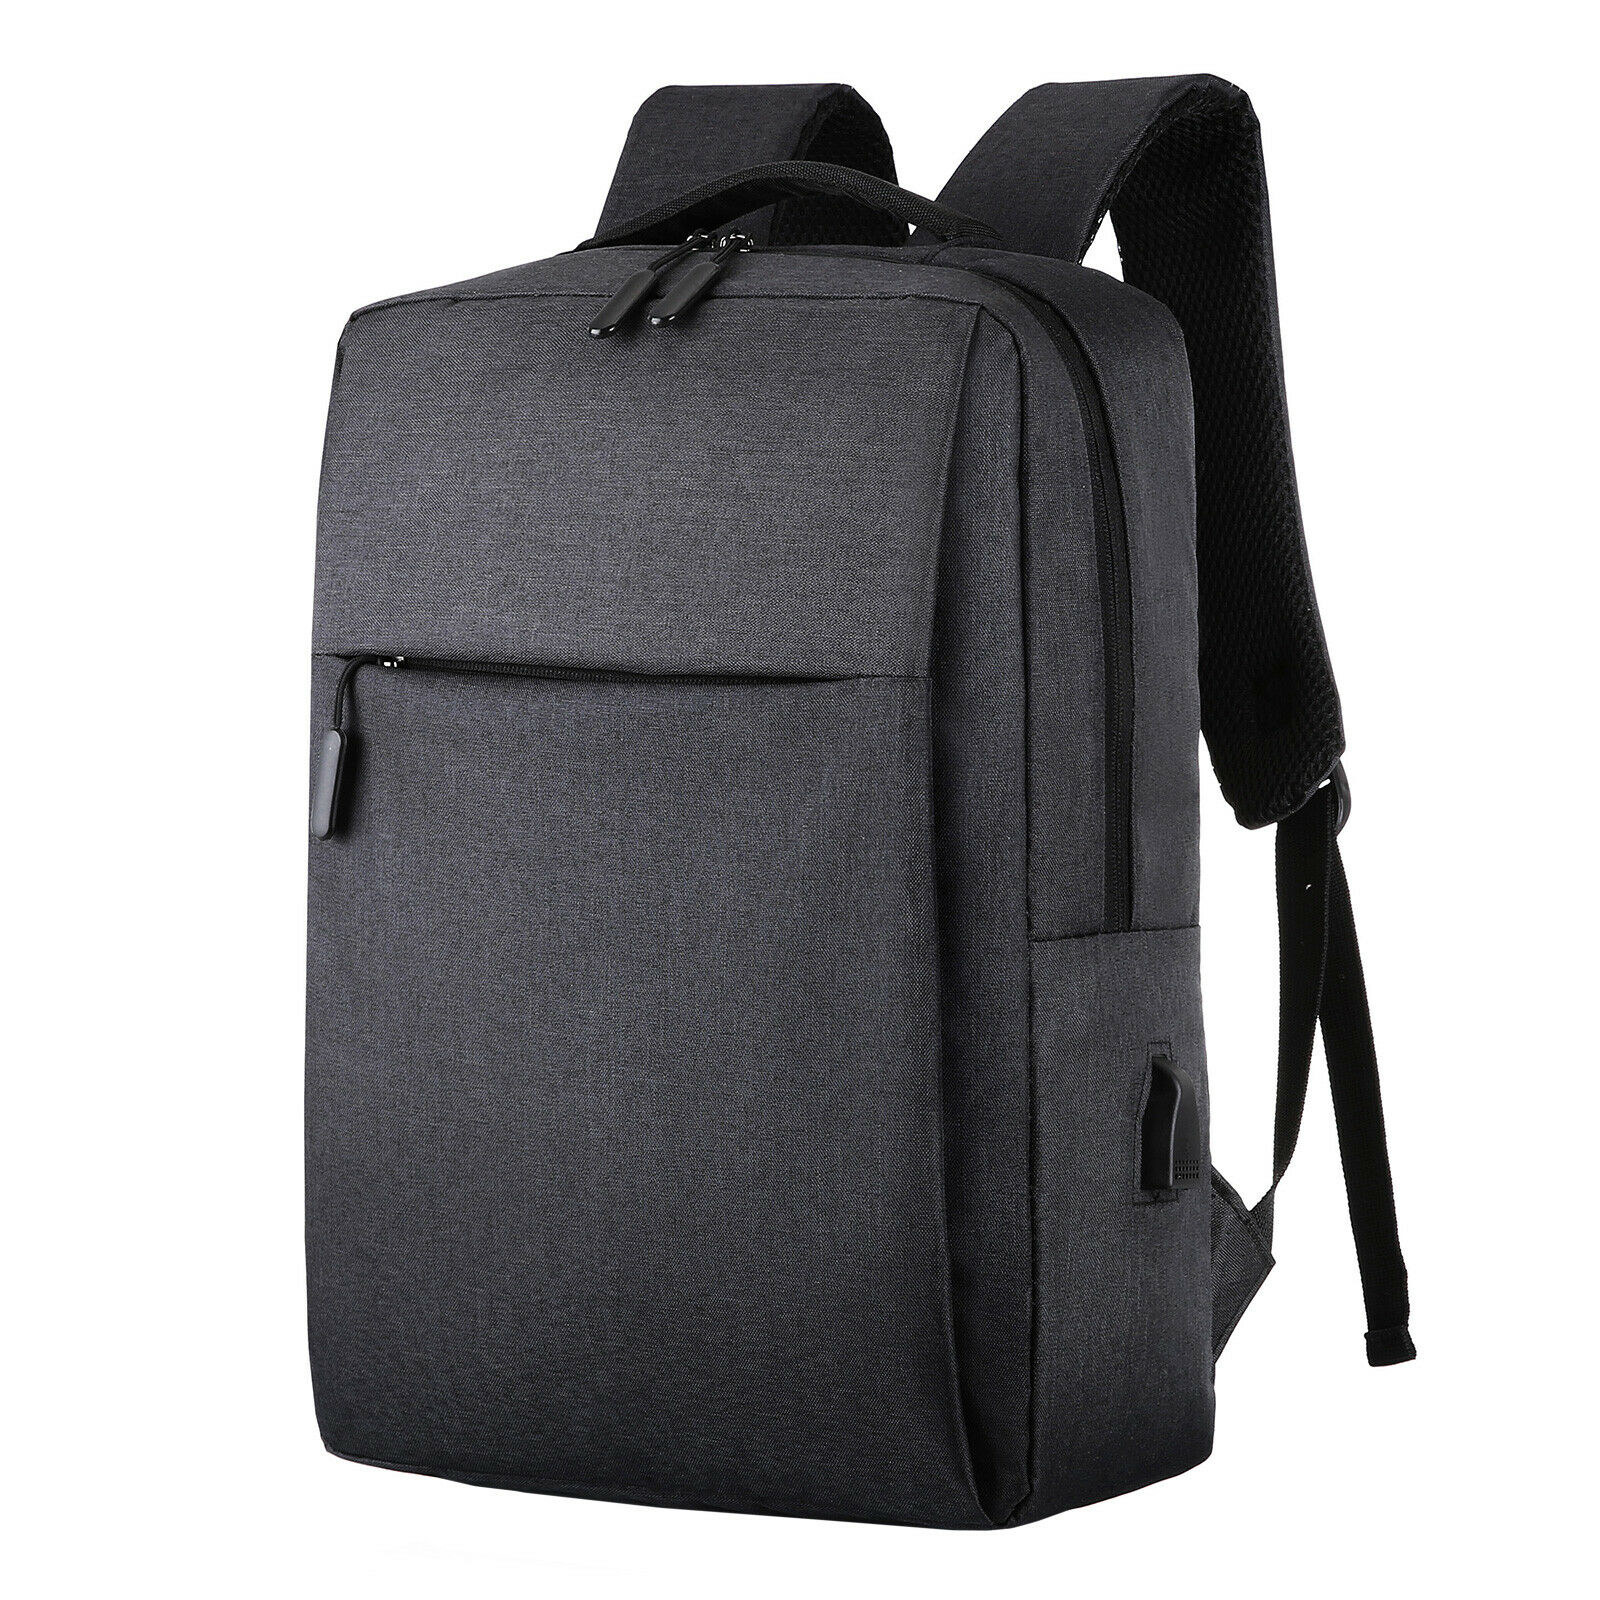 Novaa Bags 16" Slim Casual Waterproof Laptop Backpack with USB Charging Port Black - image 3 of 5